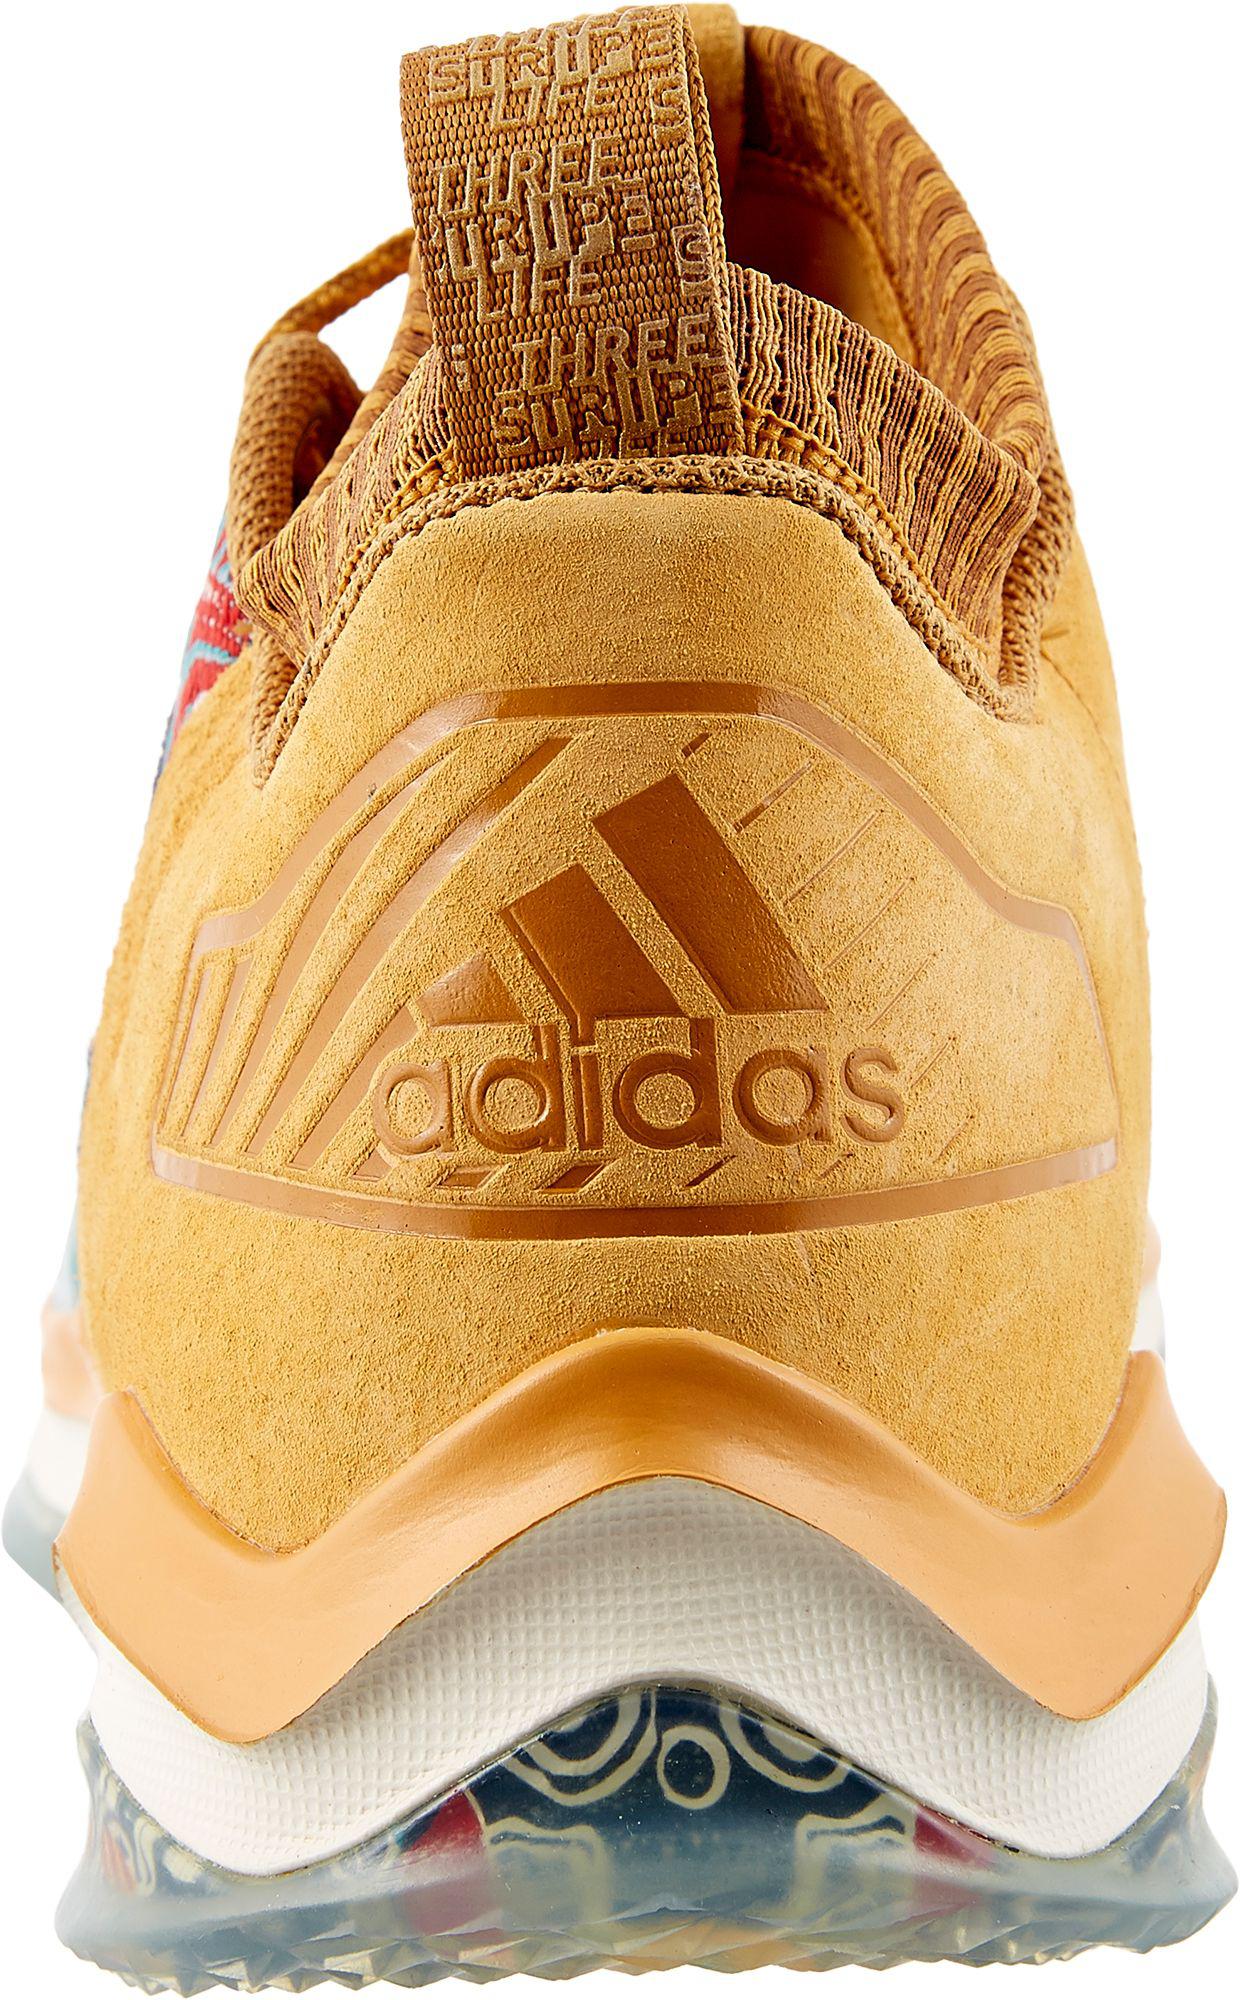 adidas baseball turf shoes